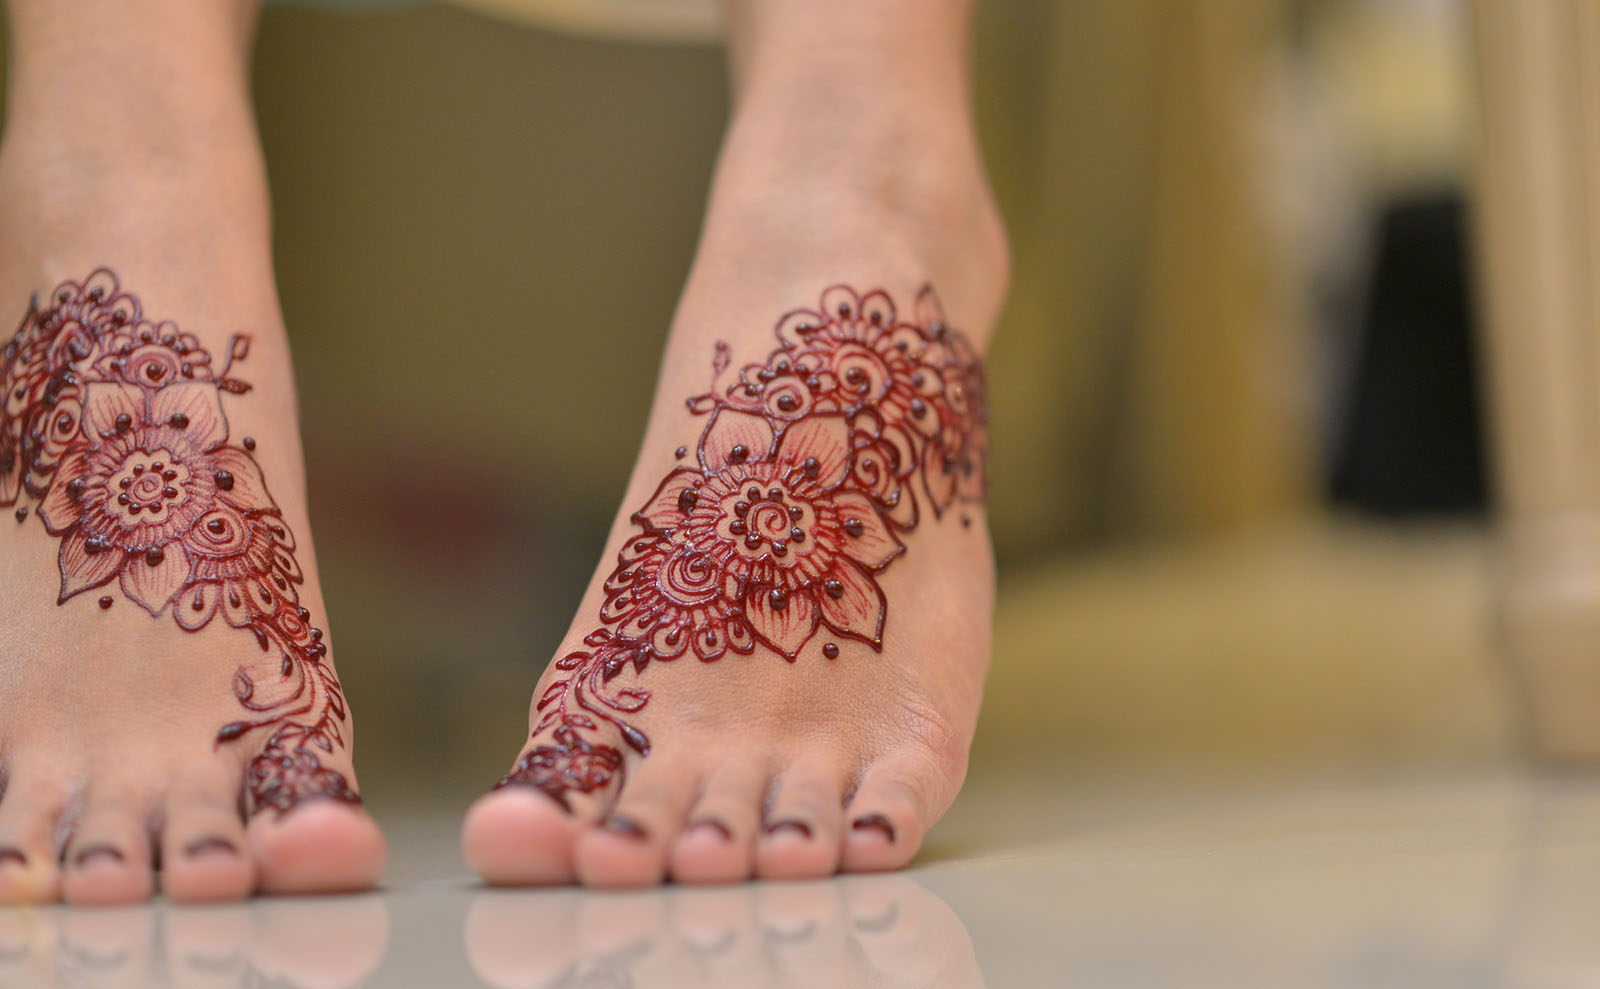 a woman's feet displaying black henna tattoos